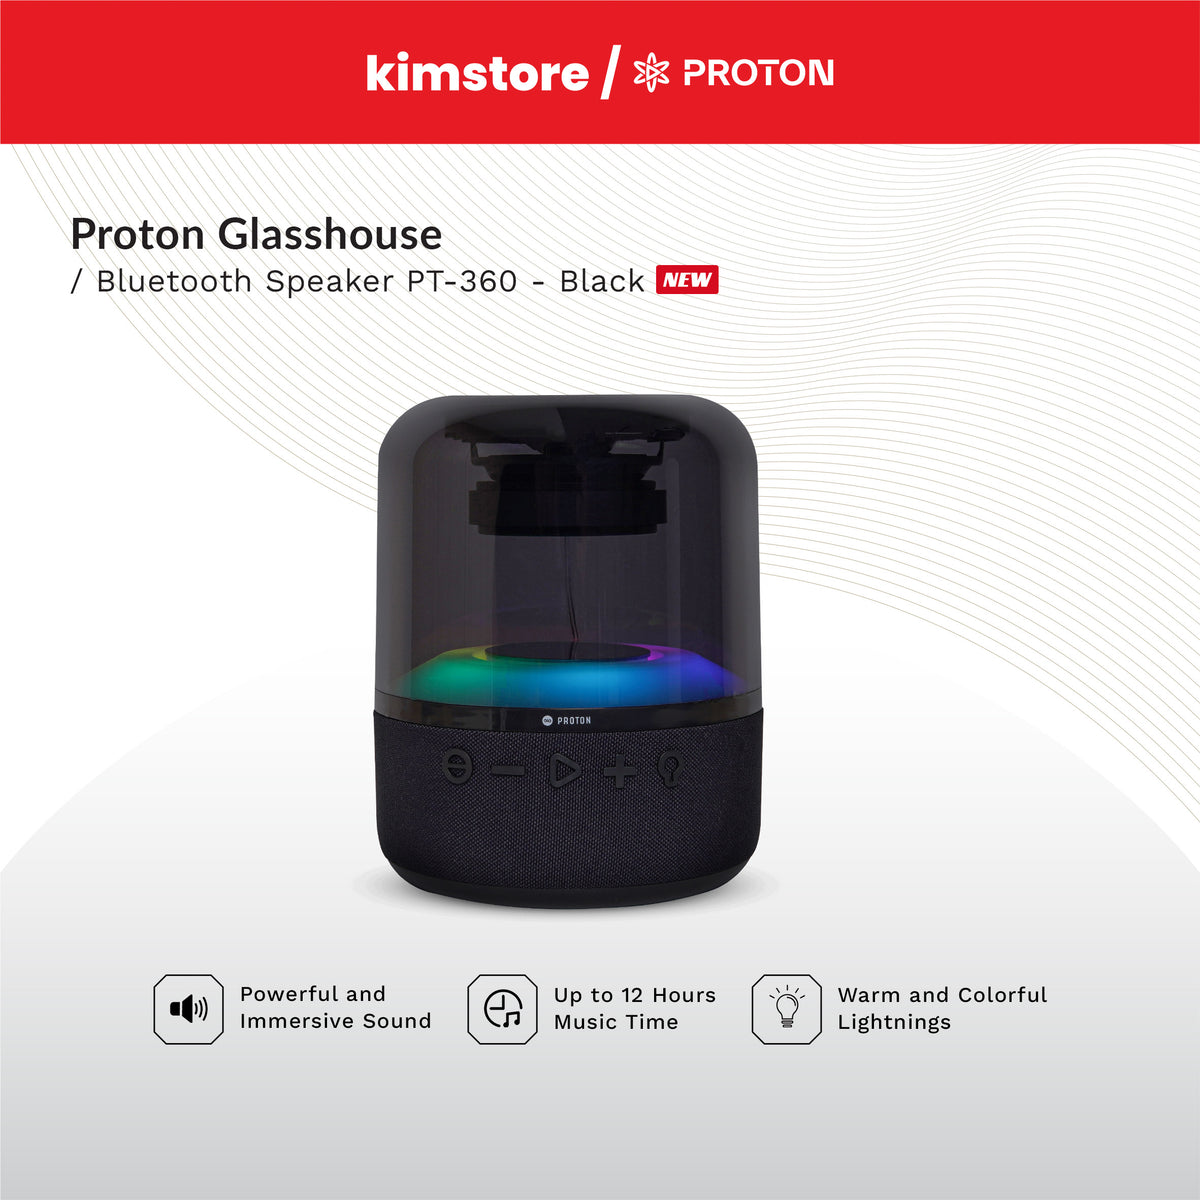 Proton Glasshouse Bluetooth Speaker PT-360